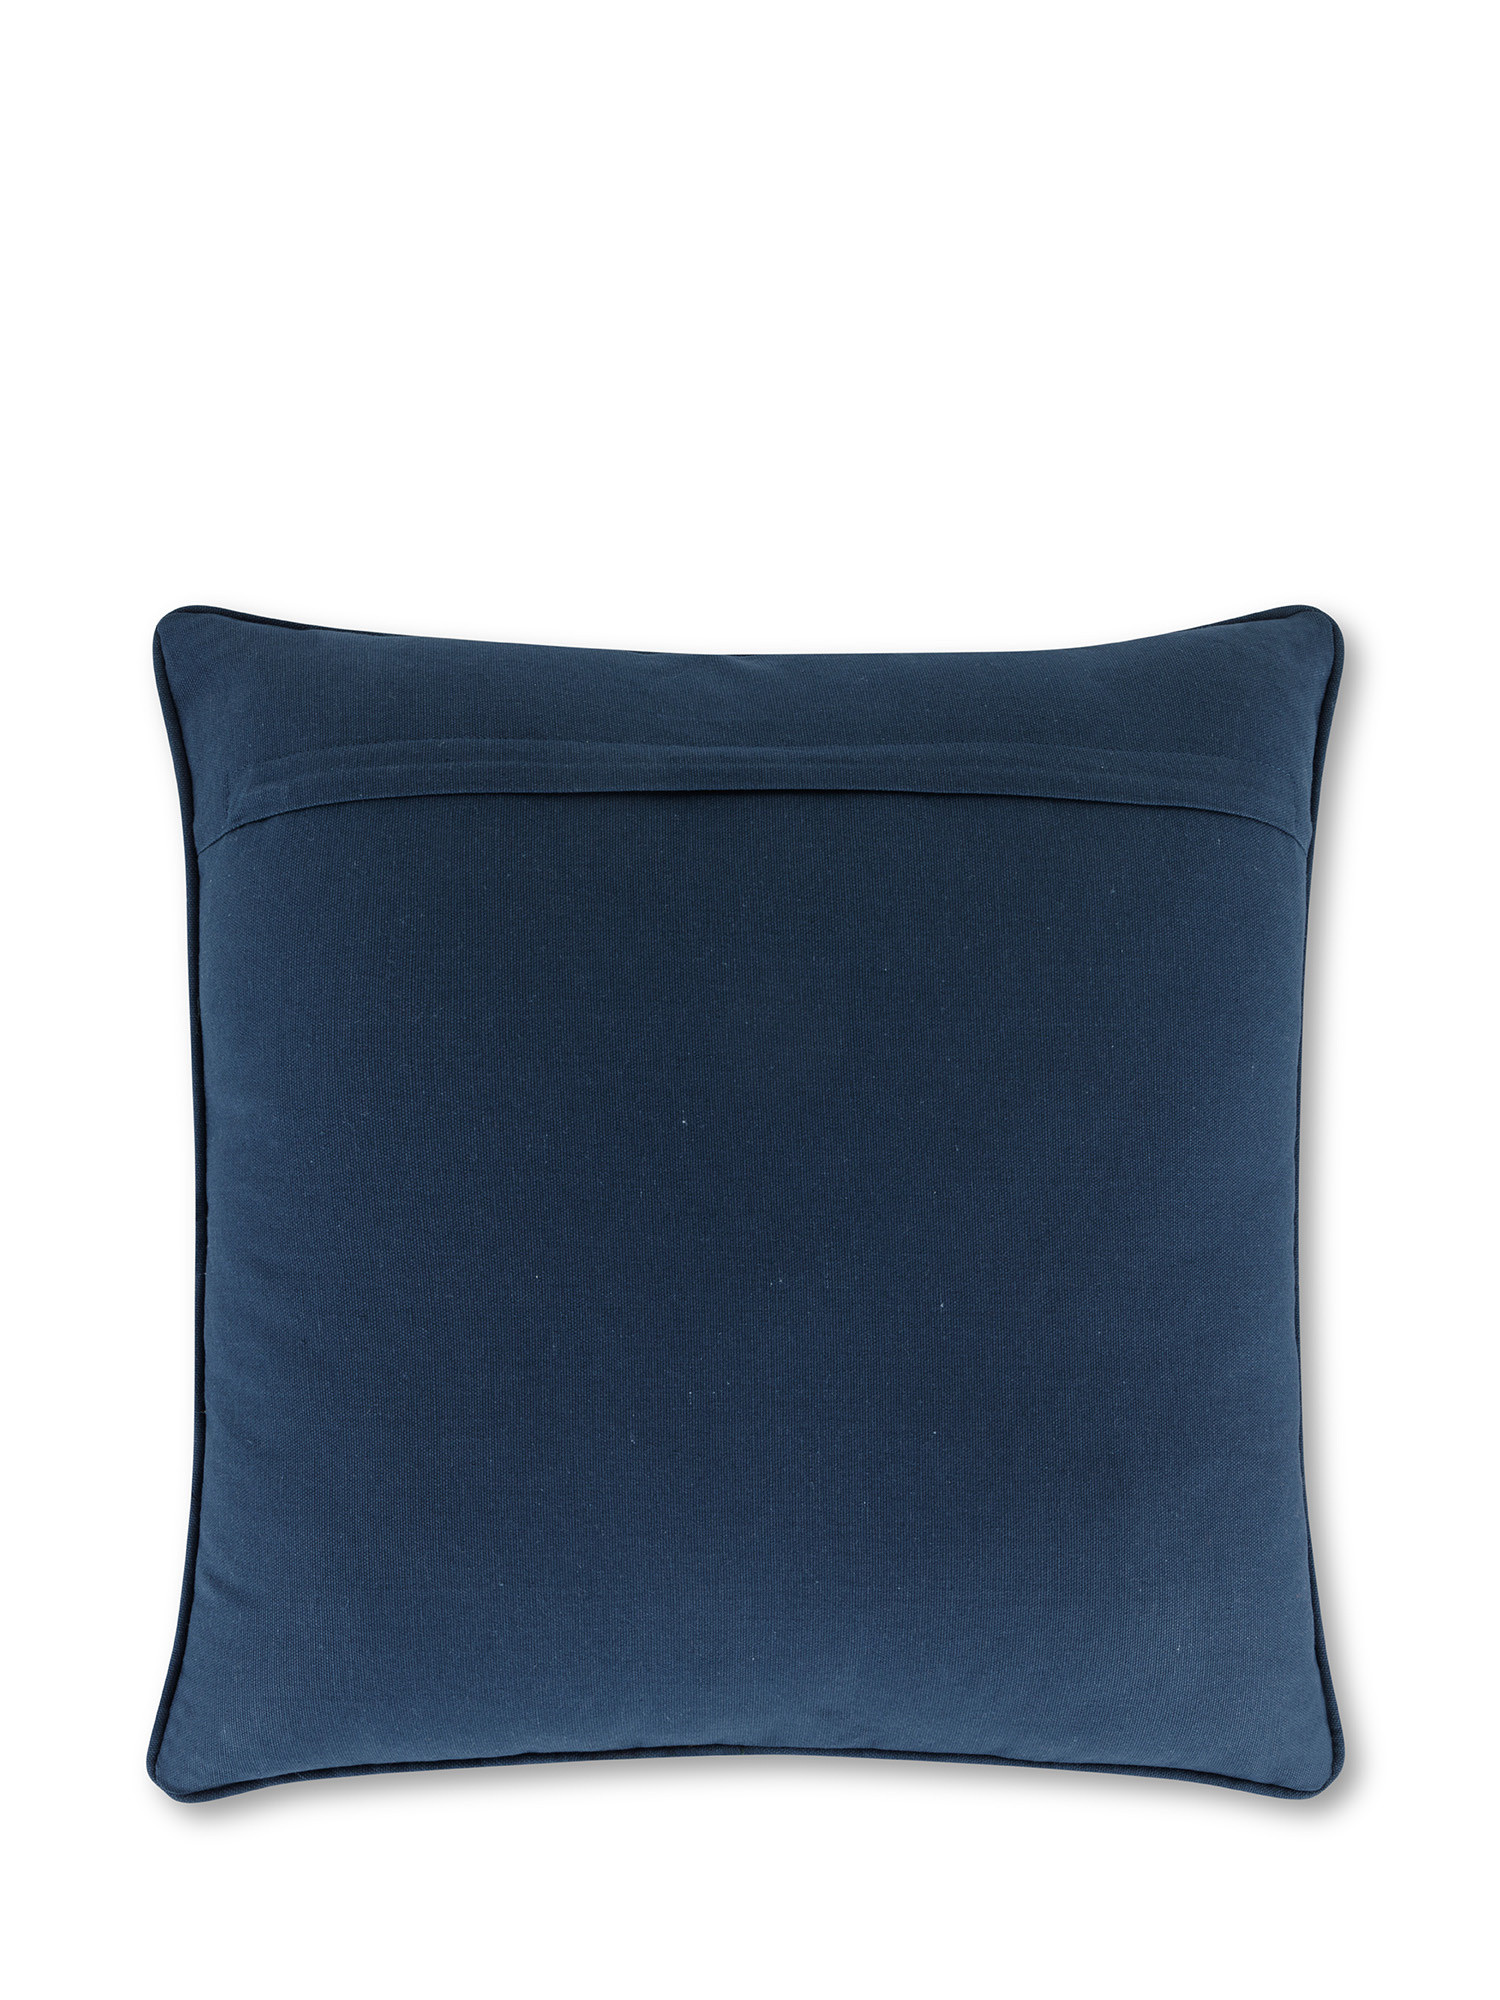 Cuscino con foglie ricamate 45x45 cm, Blu scuro, large image number 1